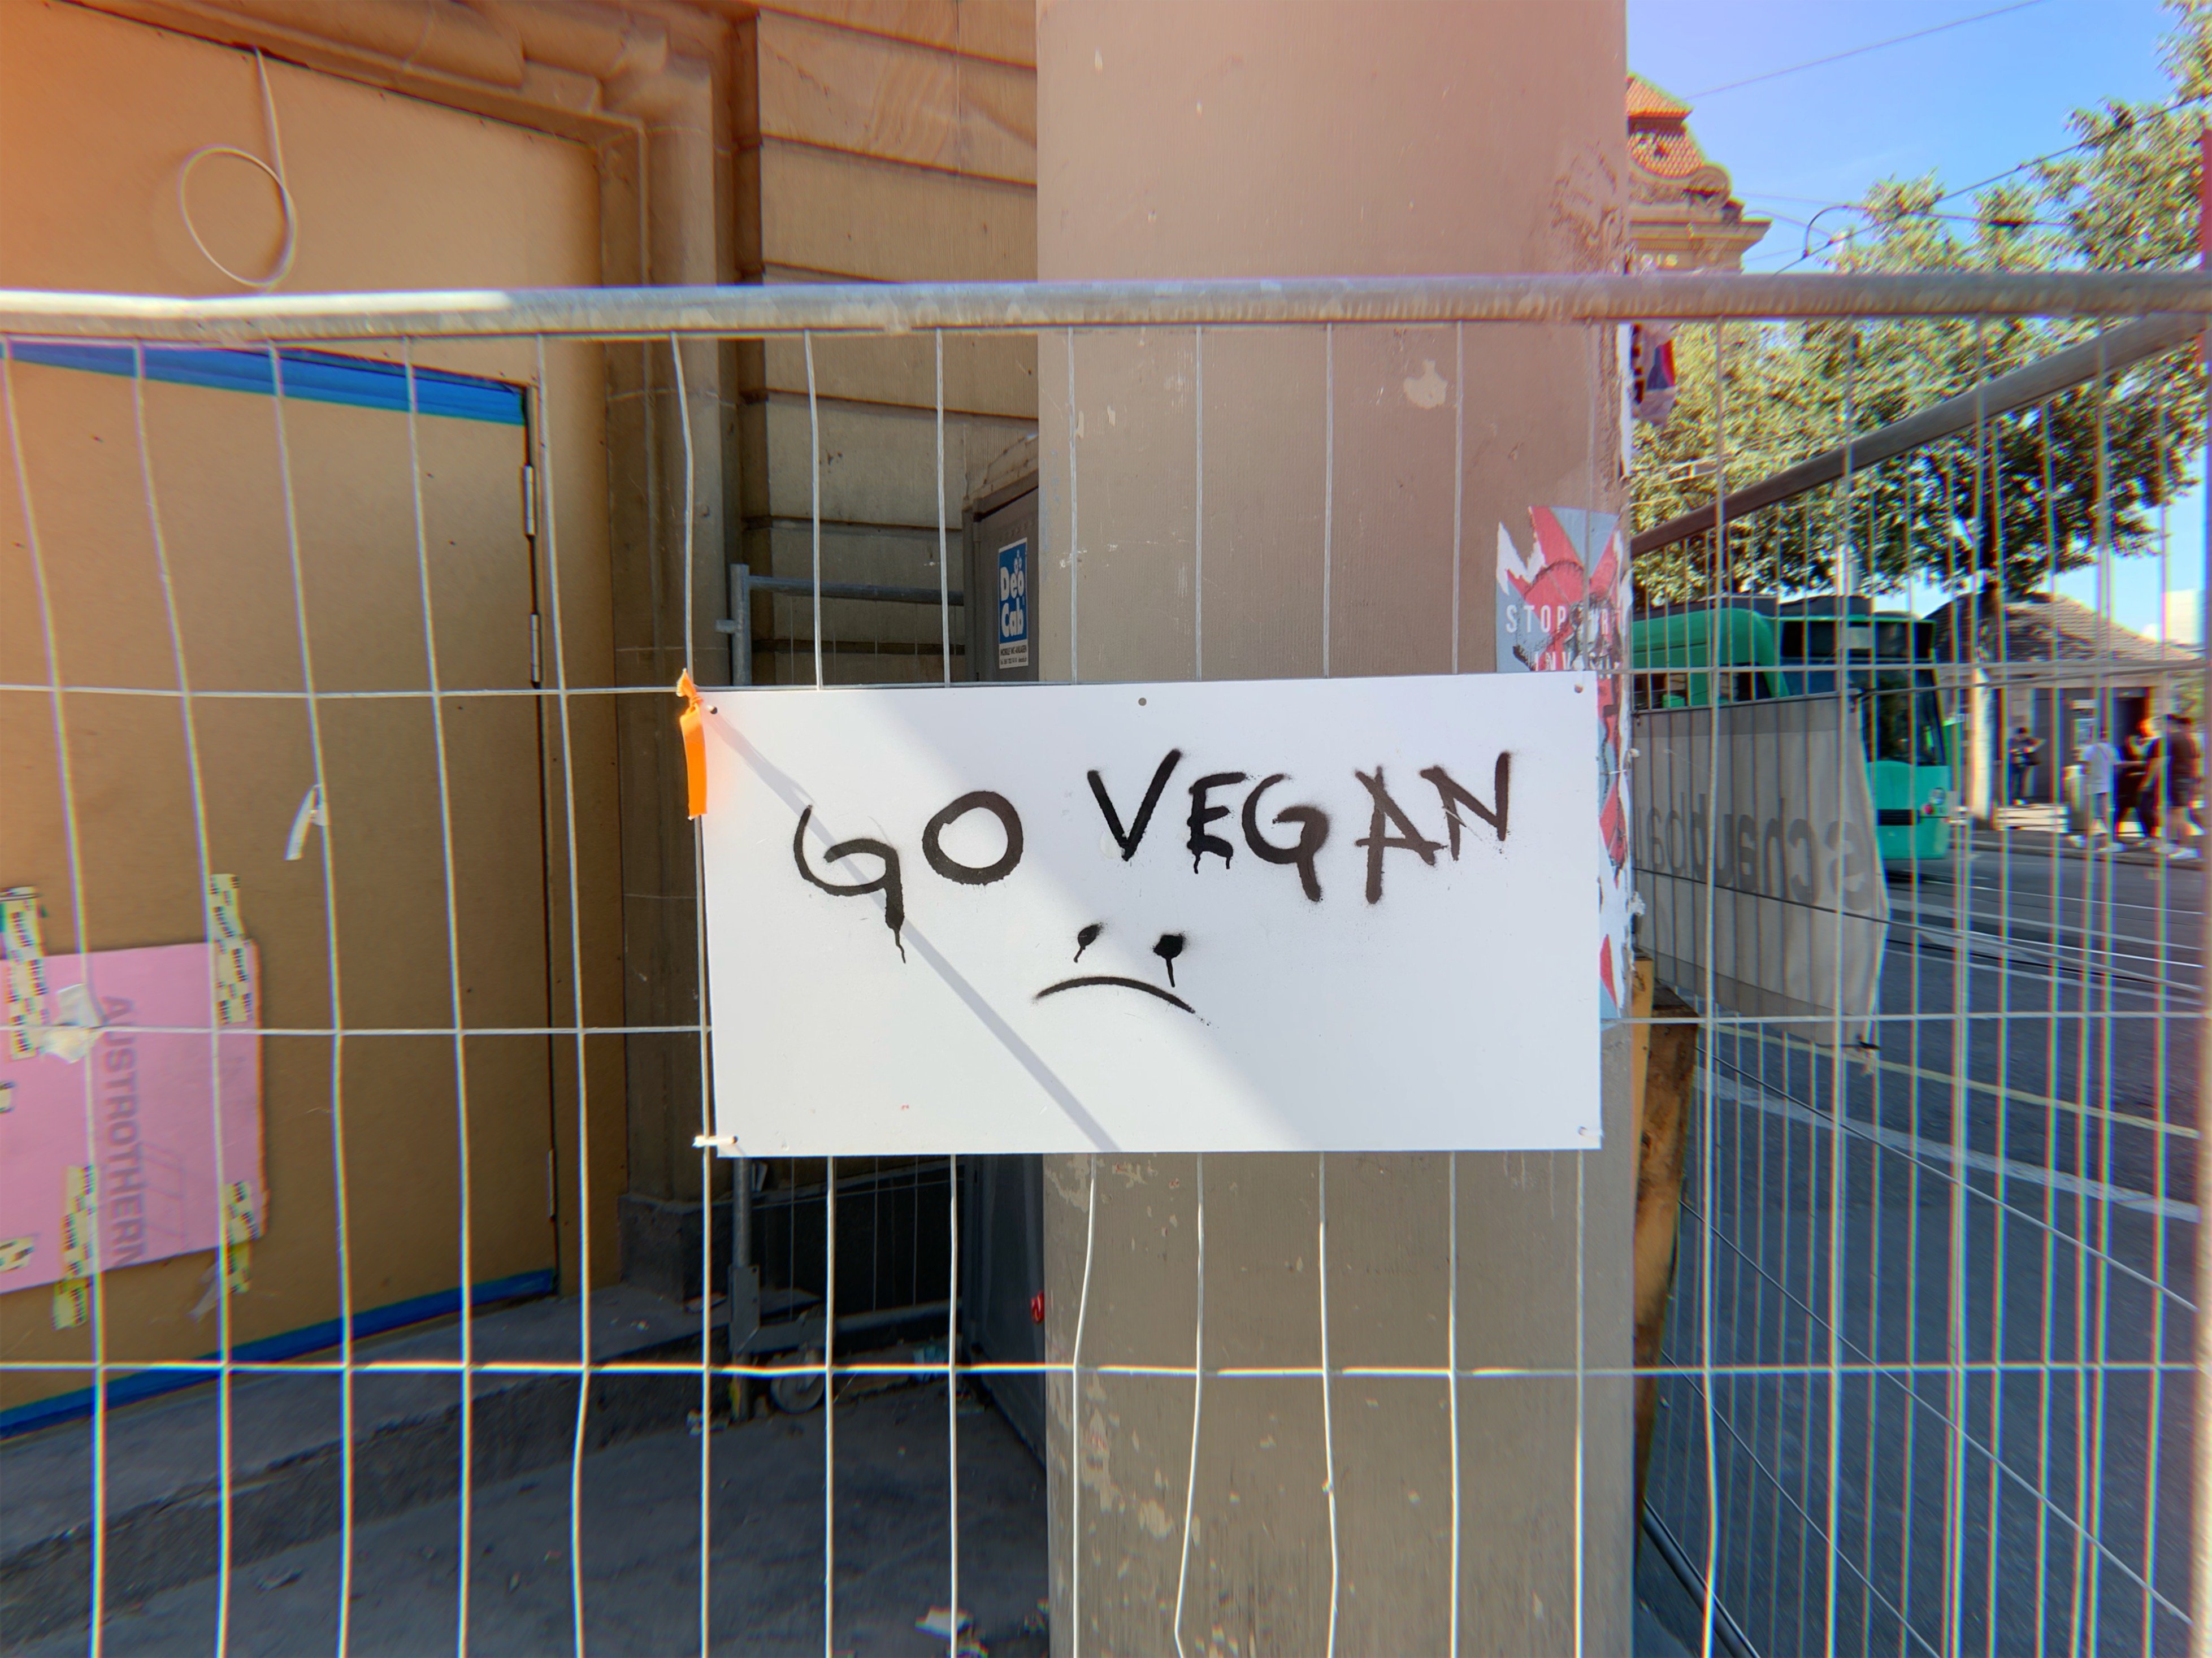 Go vegan :(